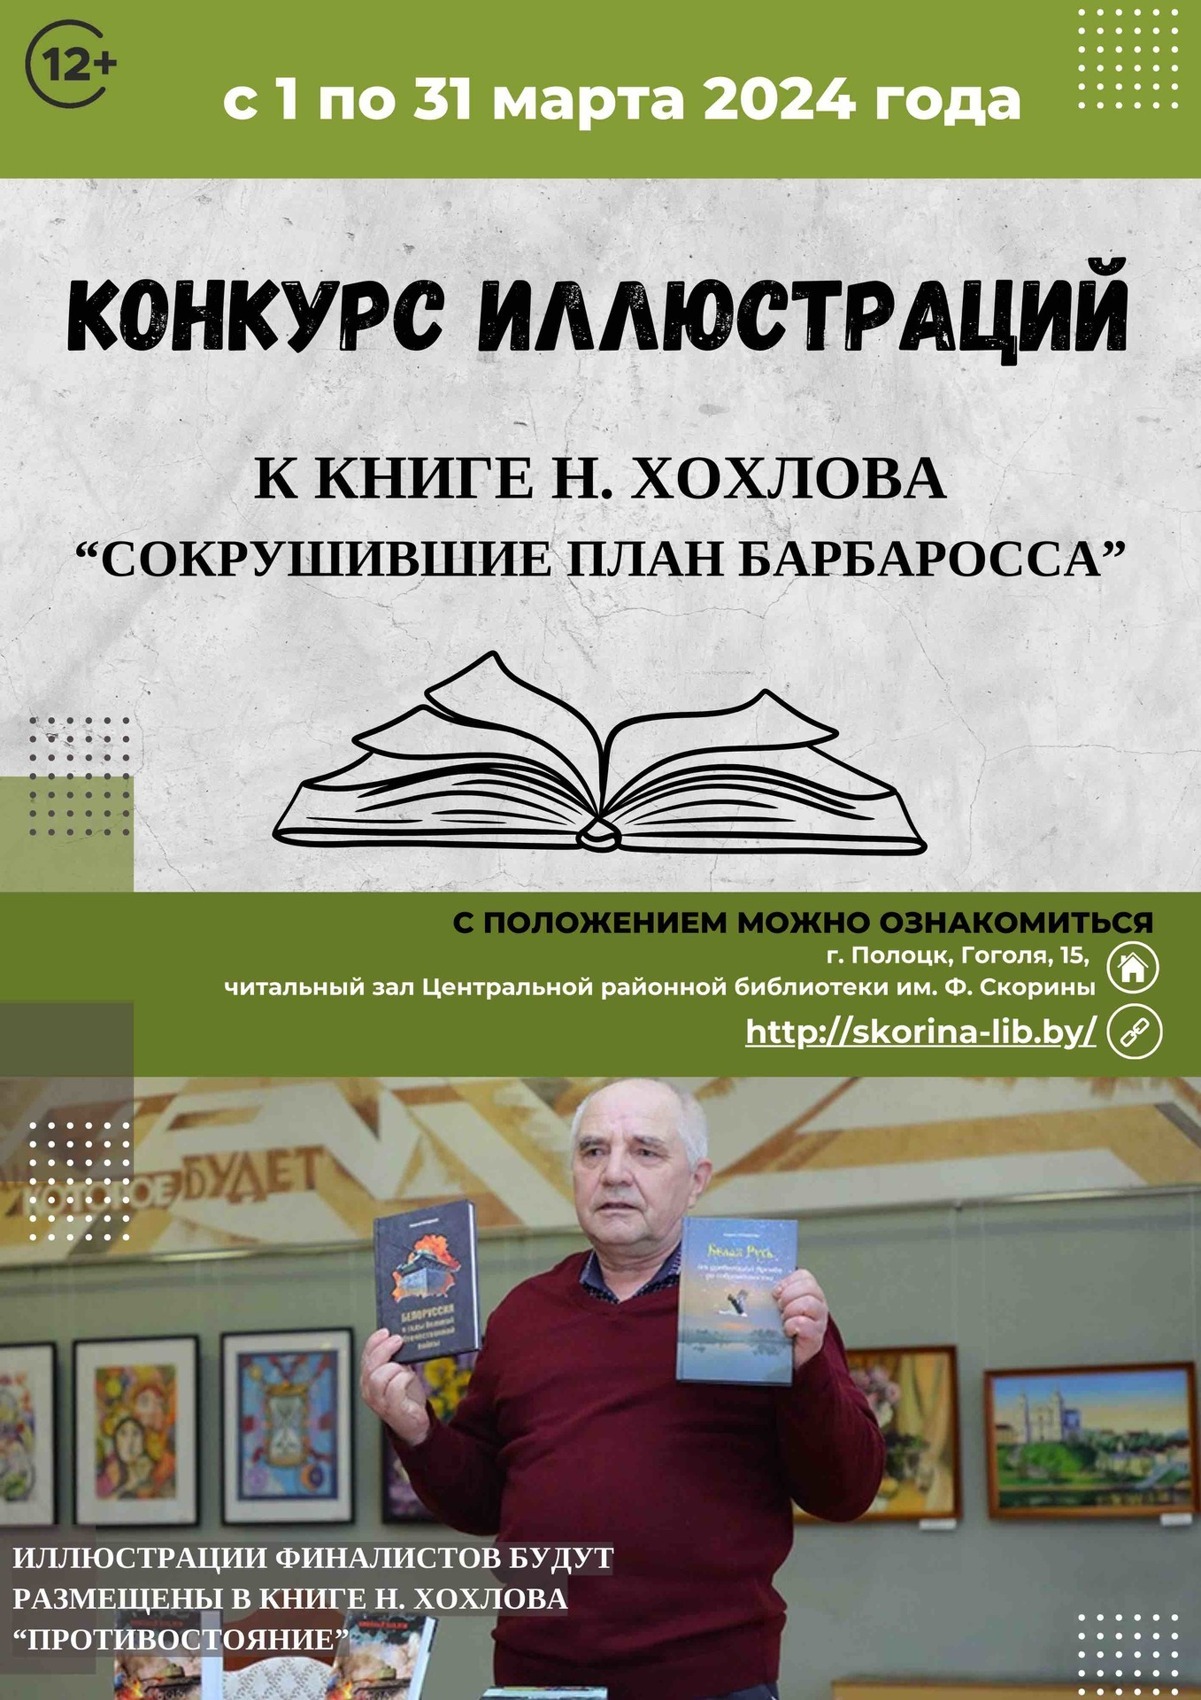 Конкурс иллюстраций по книге Николая Хохлова.